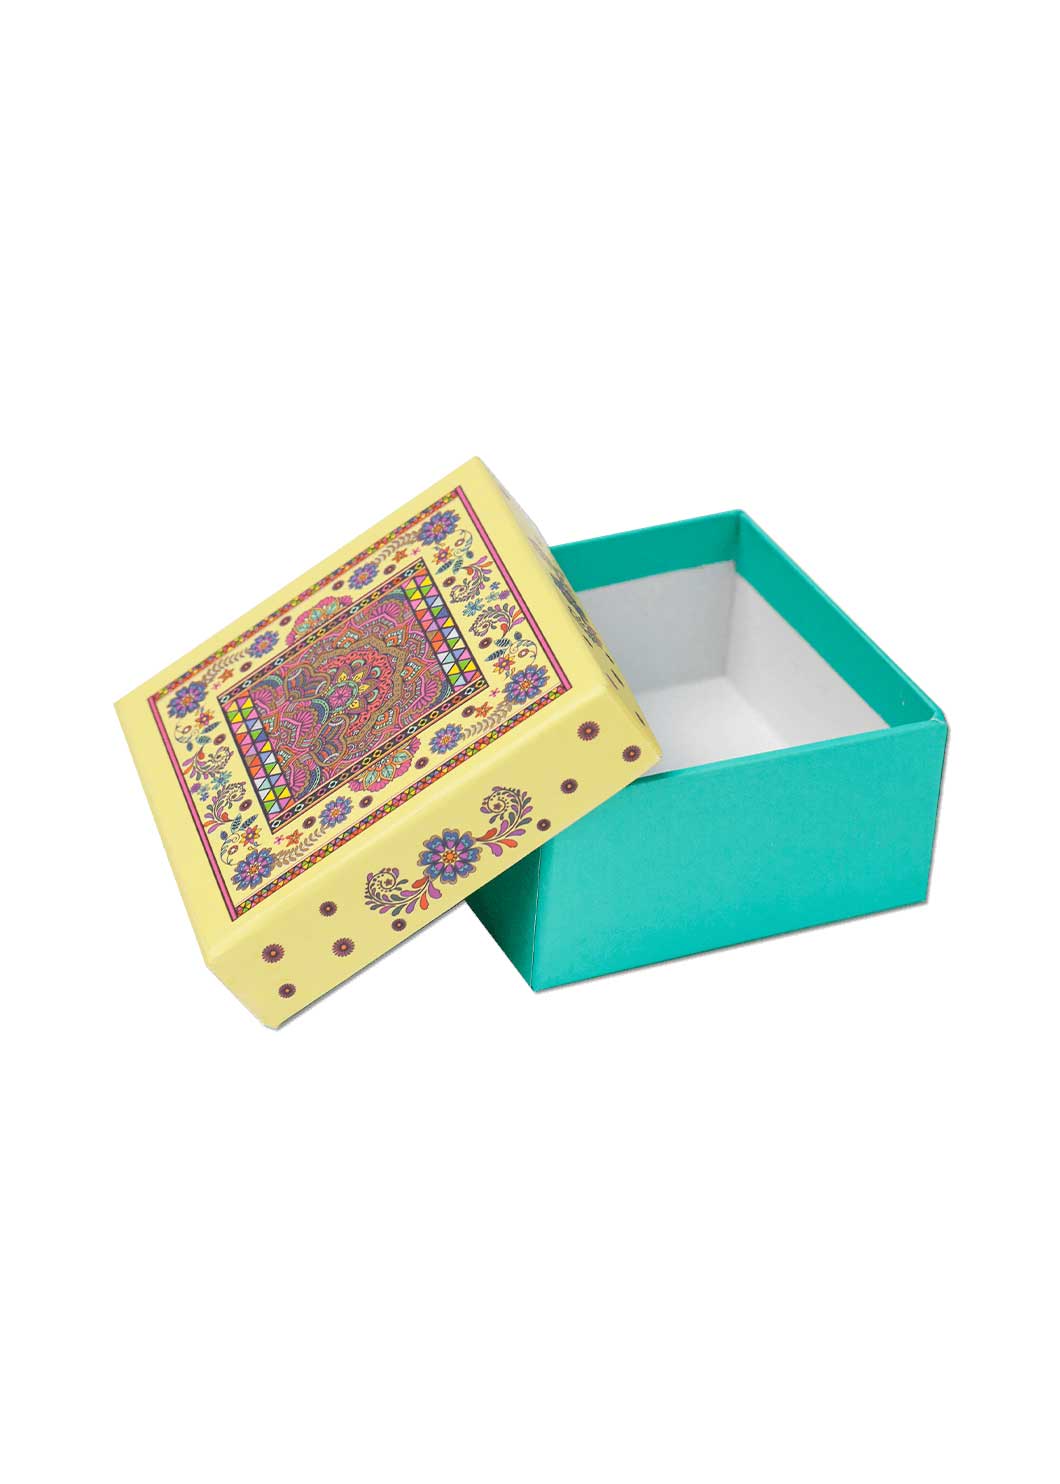 Mandala Pattern Design Box for Packing